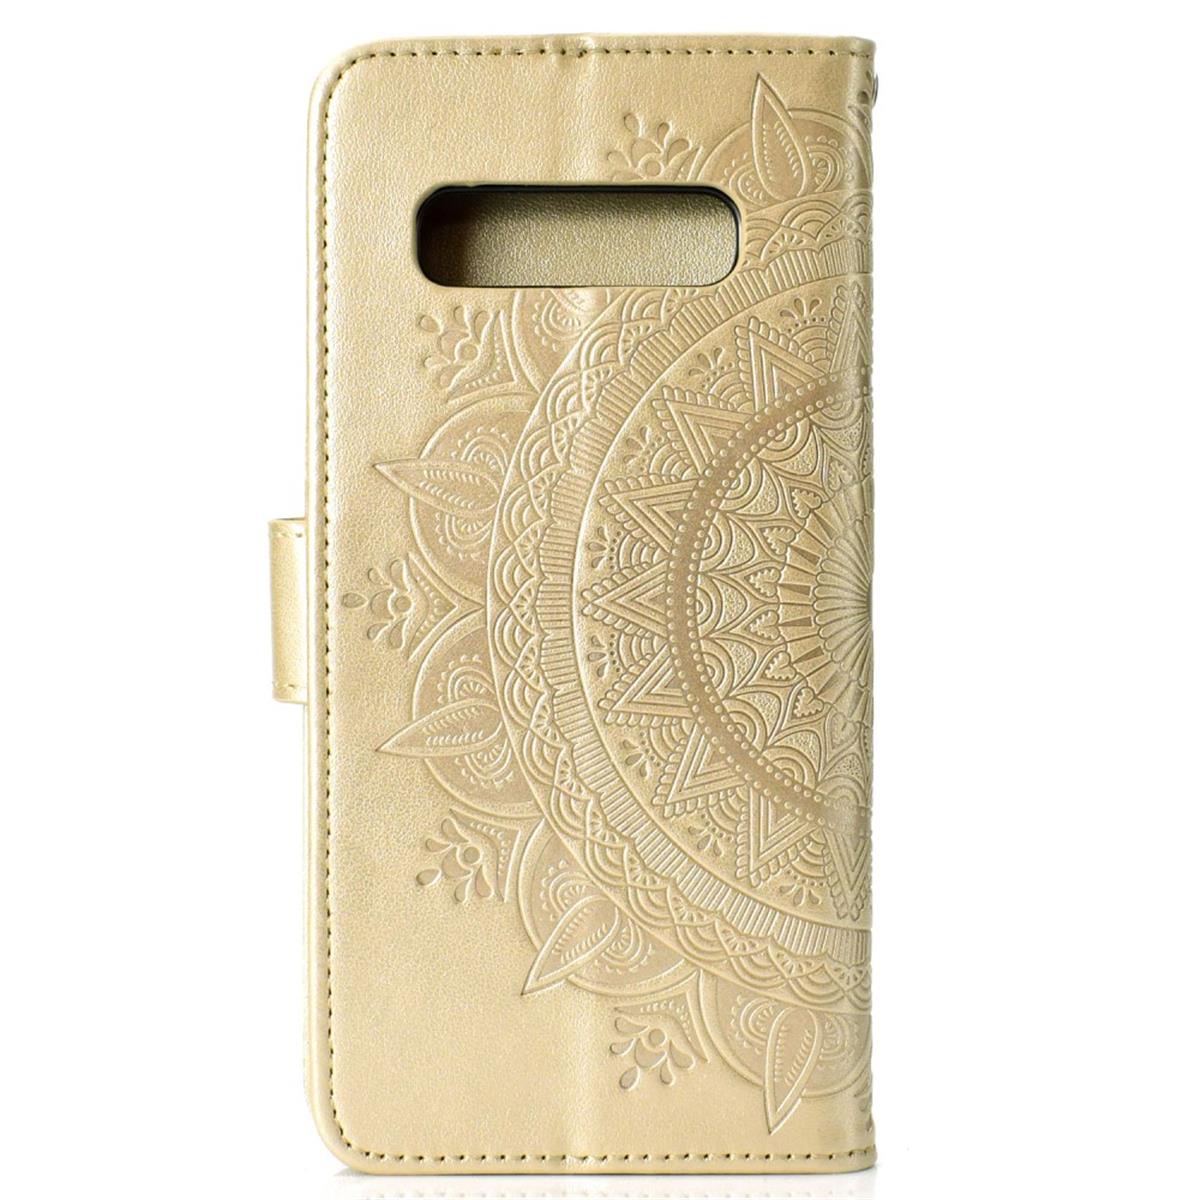 Hülle für Samsung Galaxy S10 Handyhülle Flip Case Cover Schutzhülle Mandala Gold